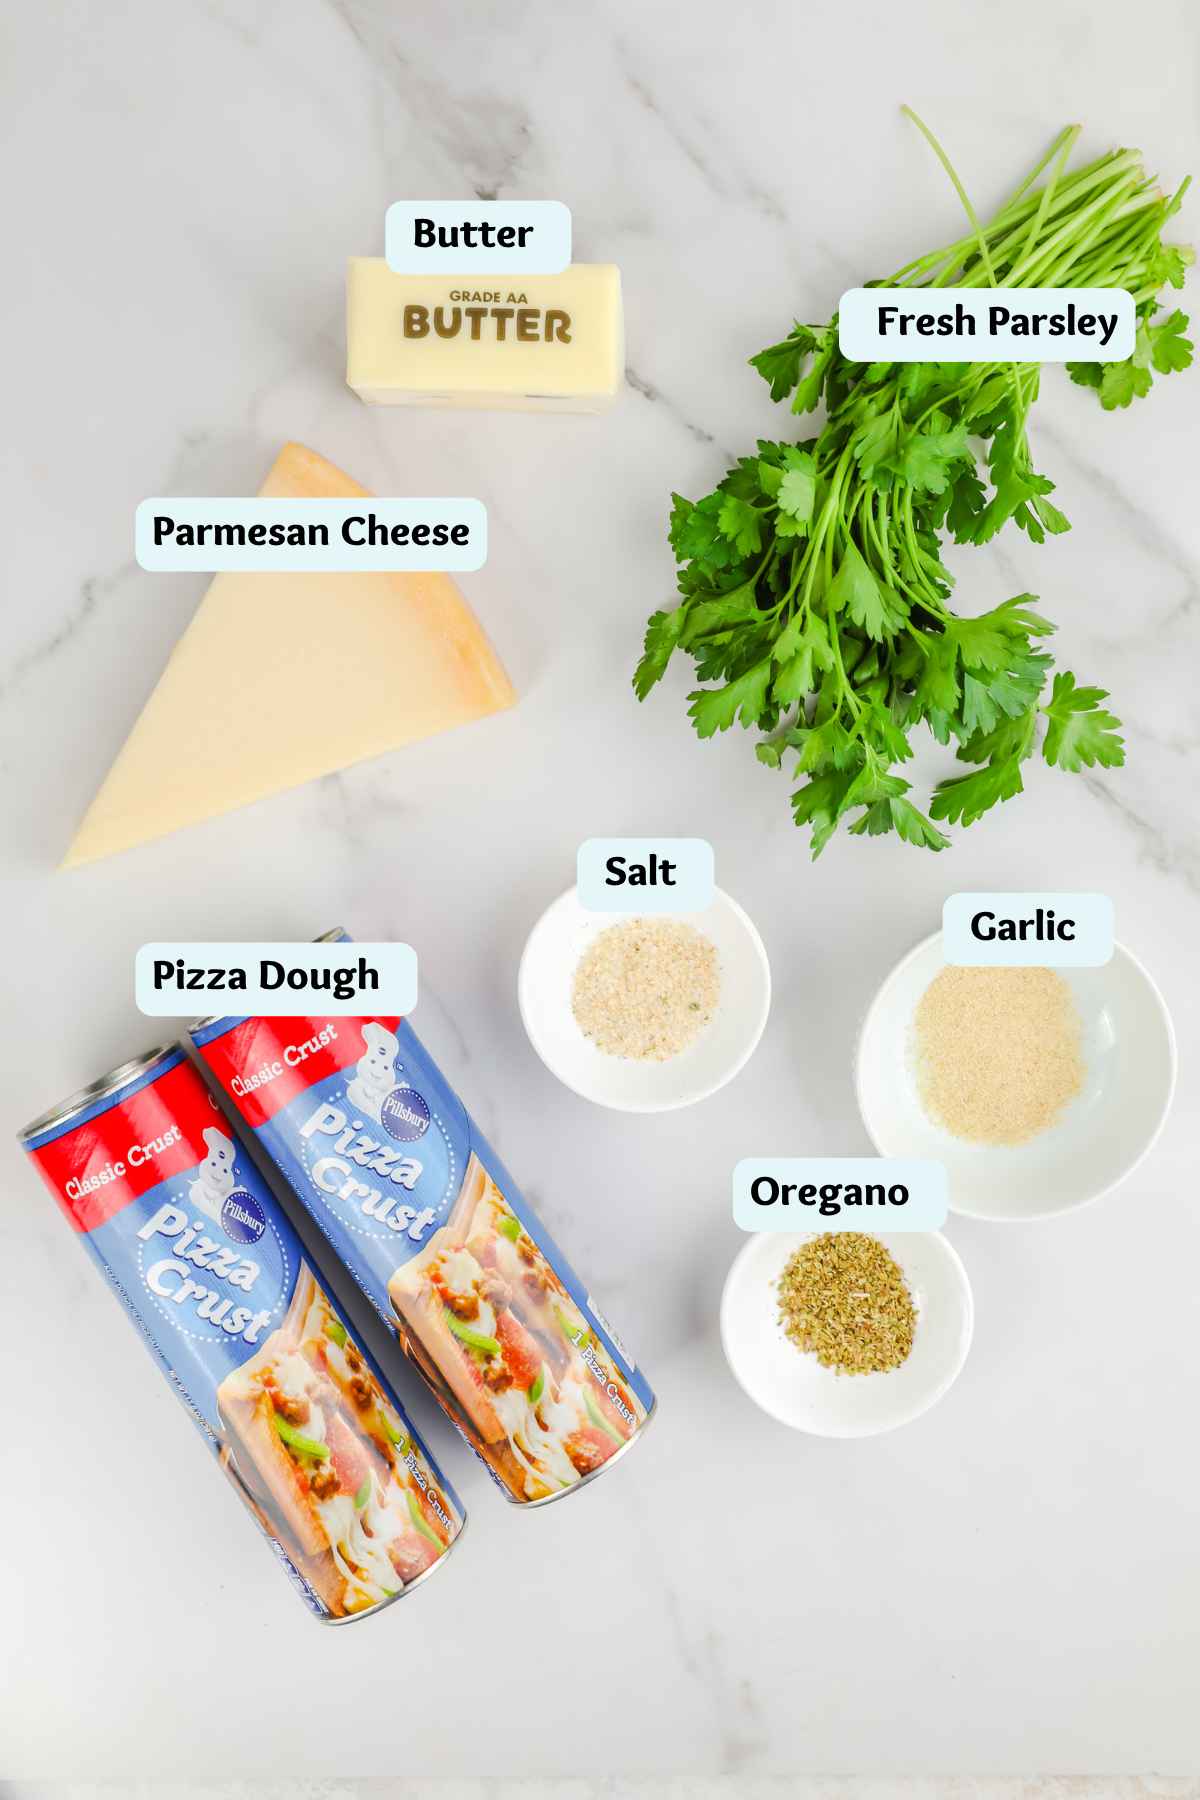 Ingredients for Garlic Knots recipe.